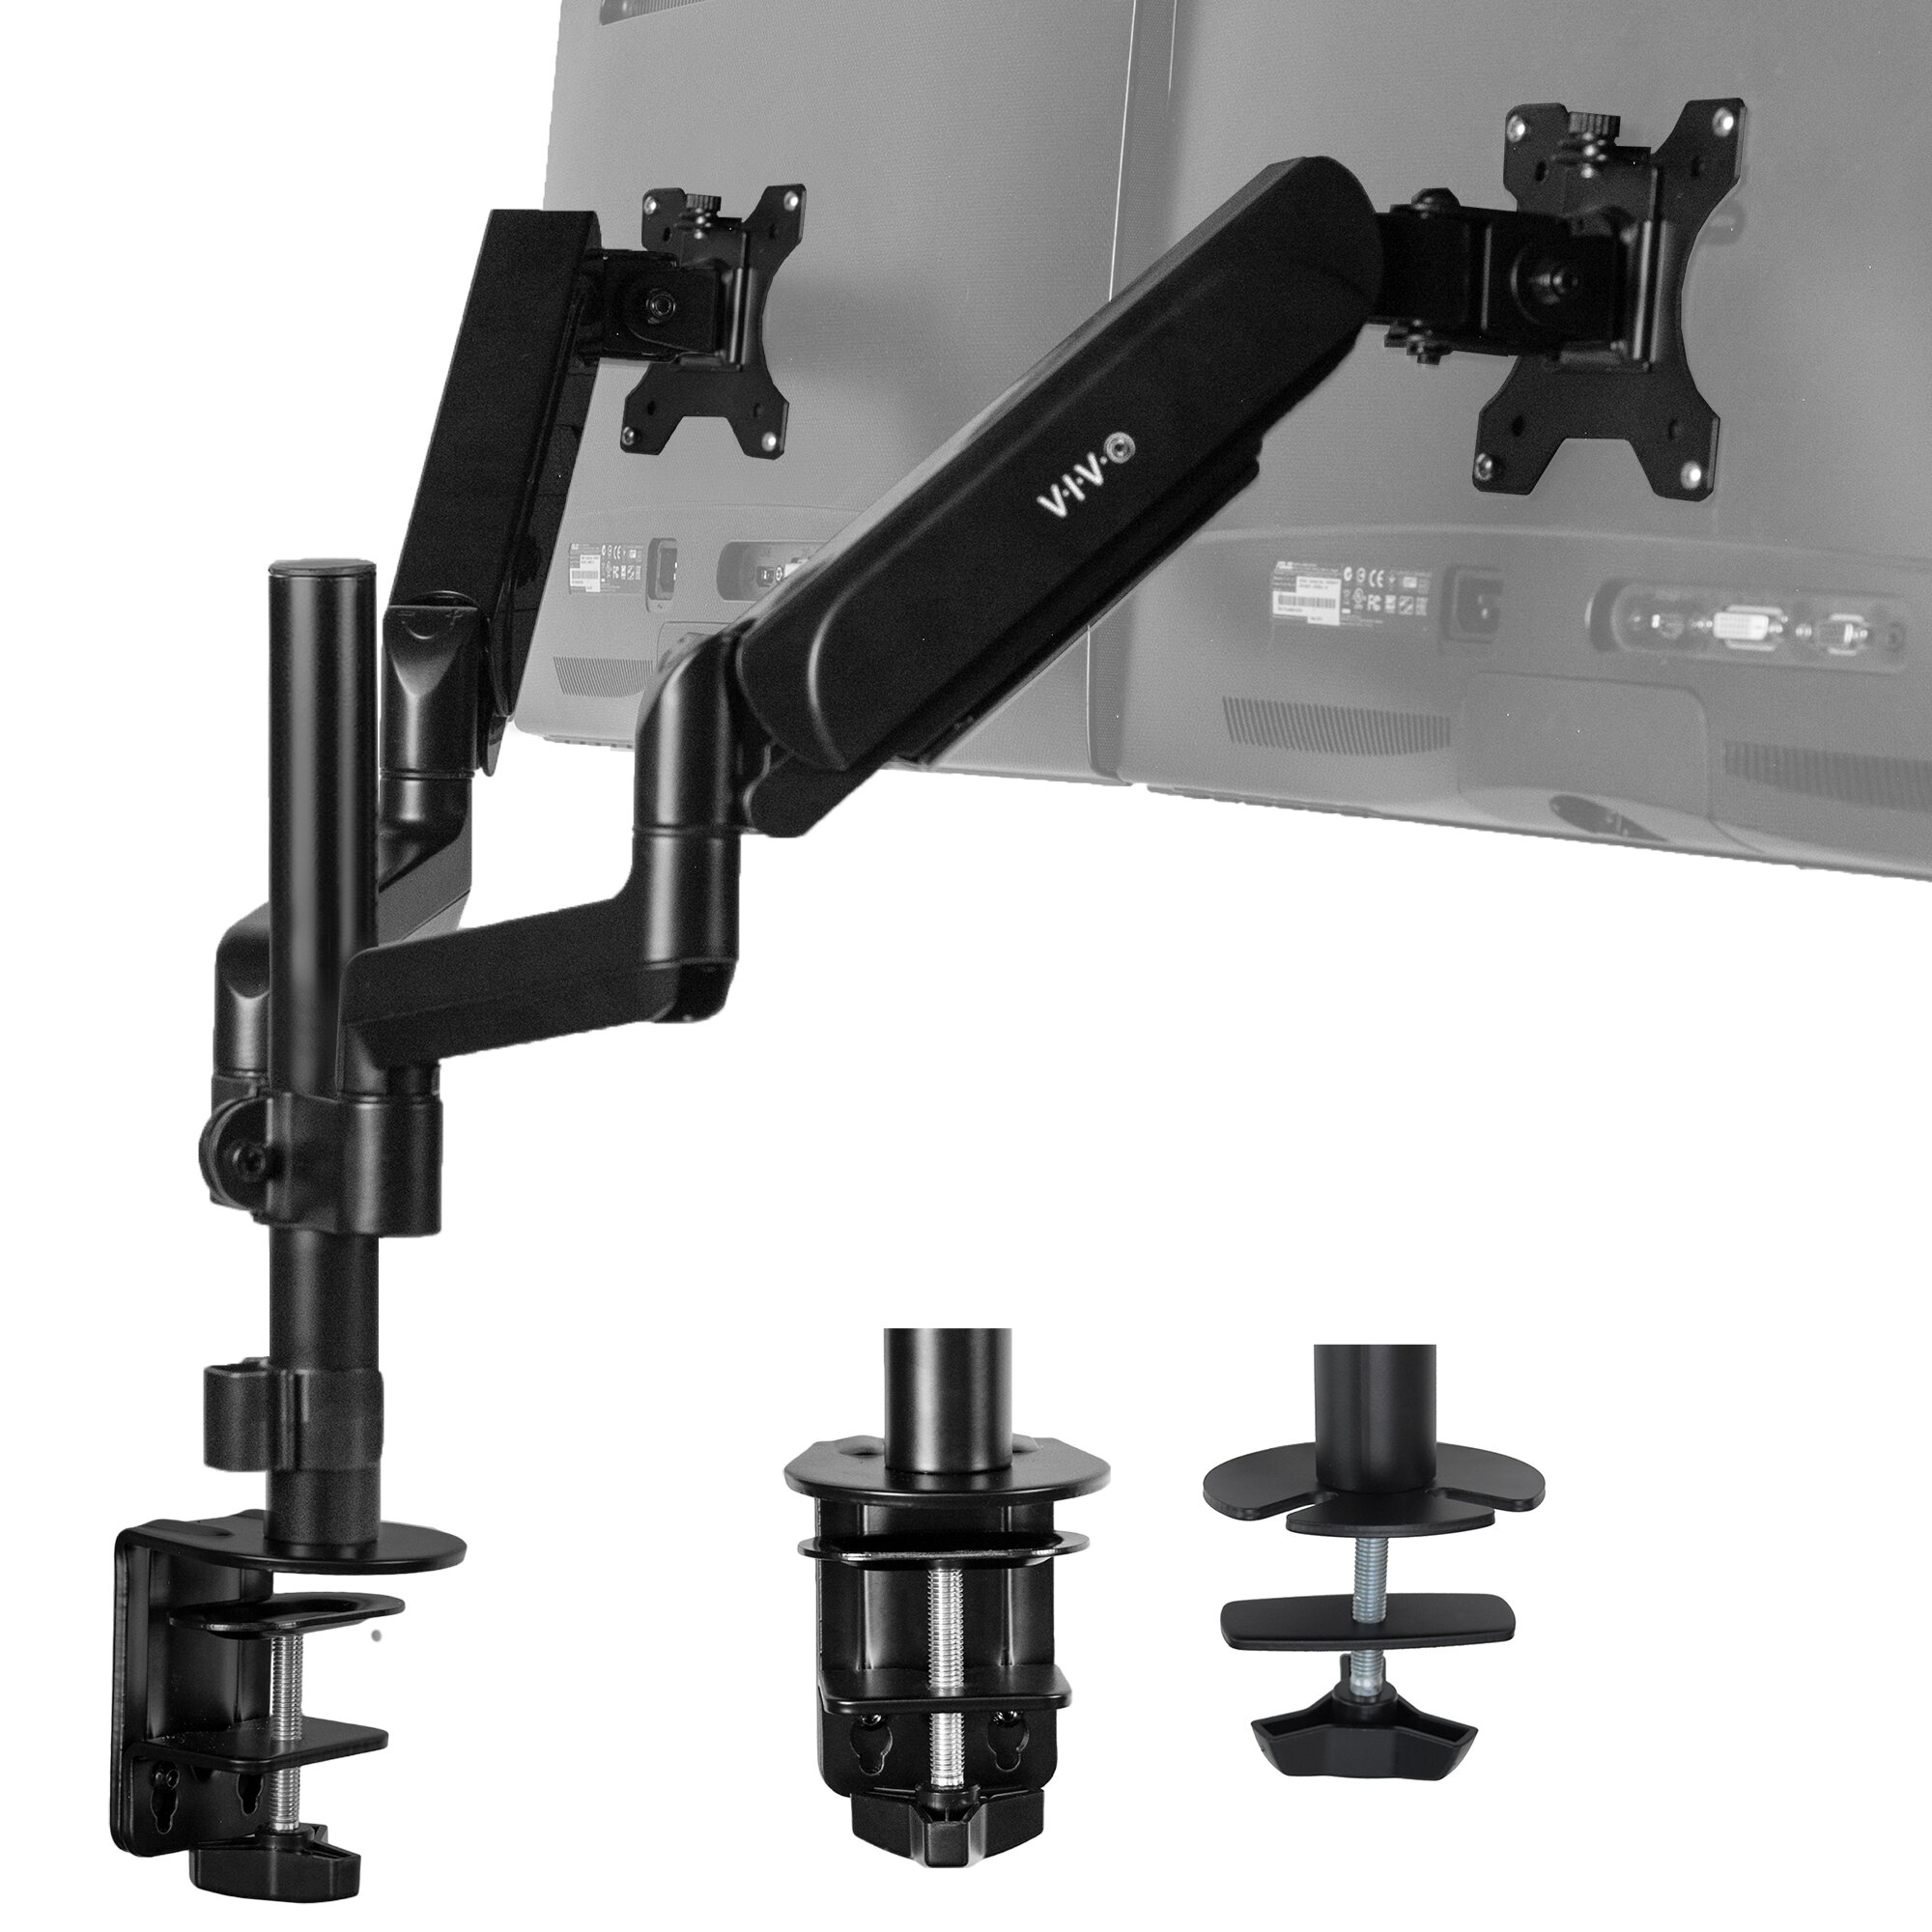 VIvo Pneumatic Arm Dual Monitor Desk Mount